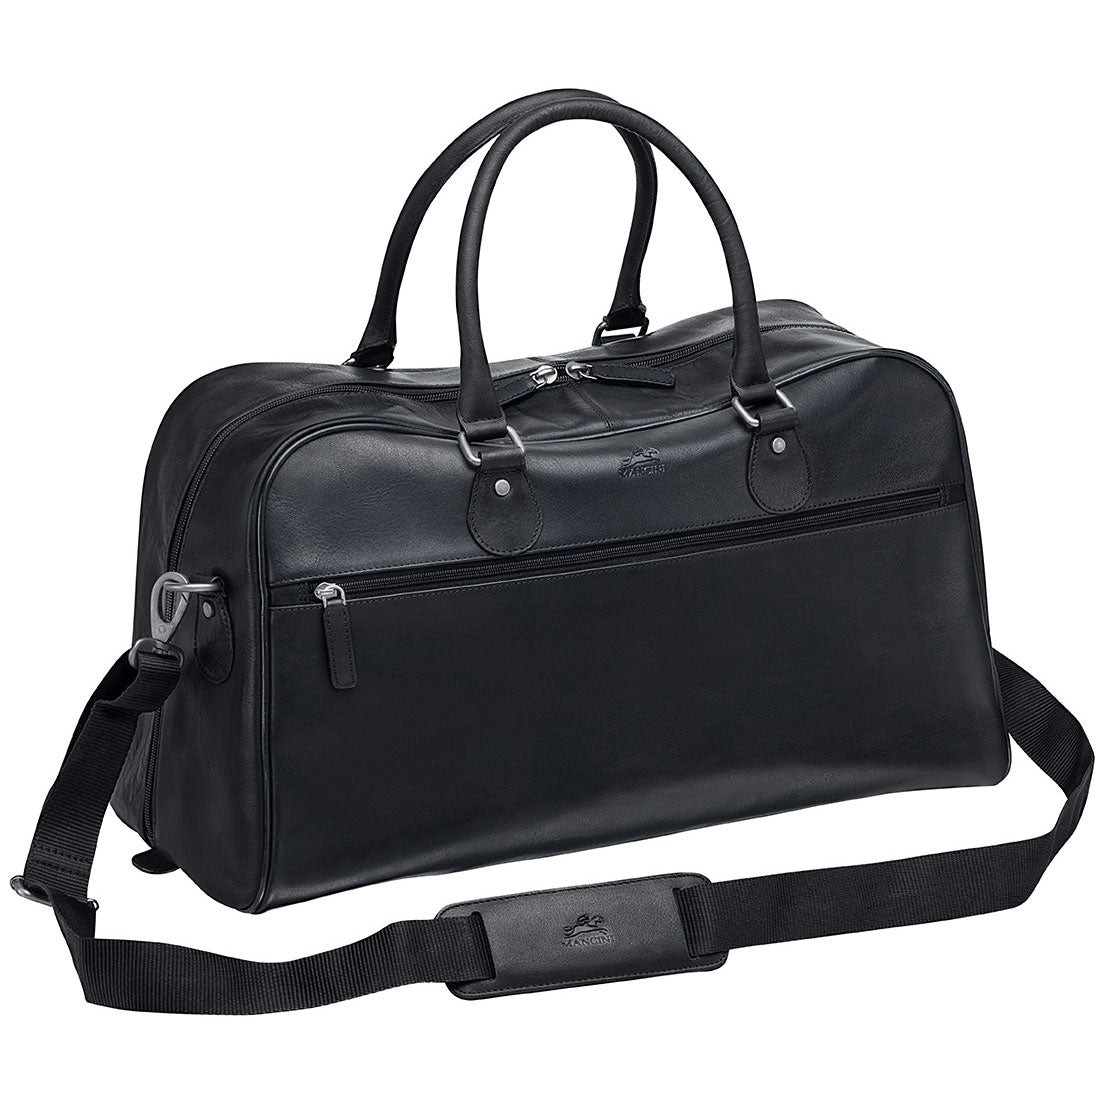 Mancini Leather Classic Duffle Bag, 21.5